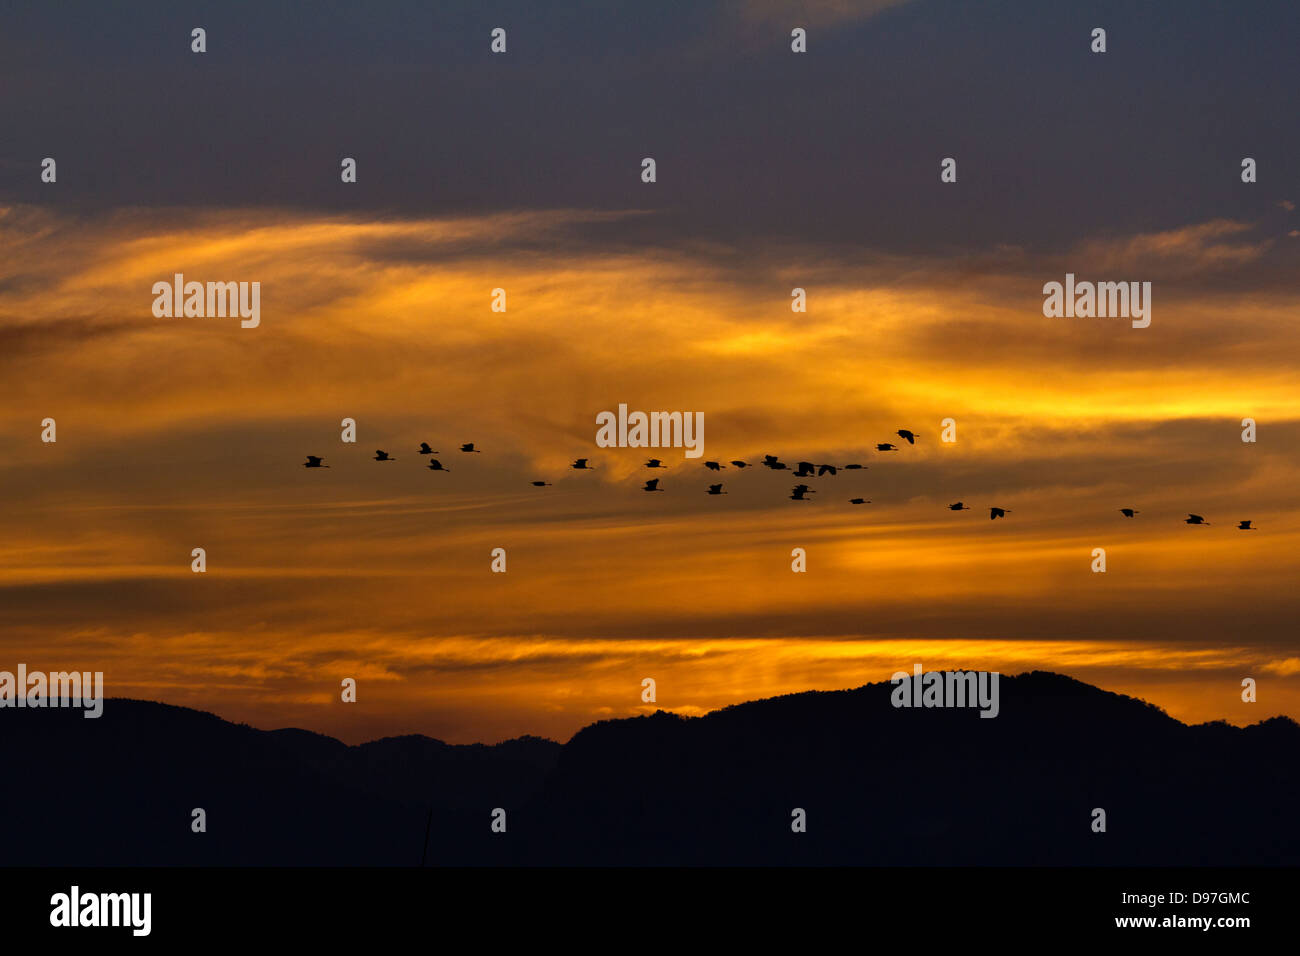 A flock of herons flying above Lake Inle, Myanmar, at dusk 2 Stock Photo